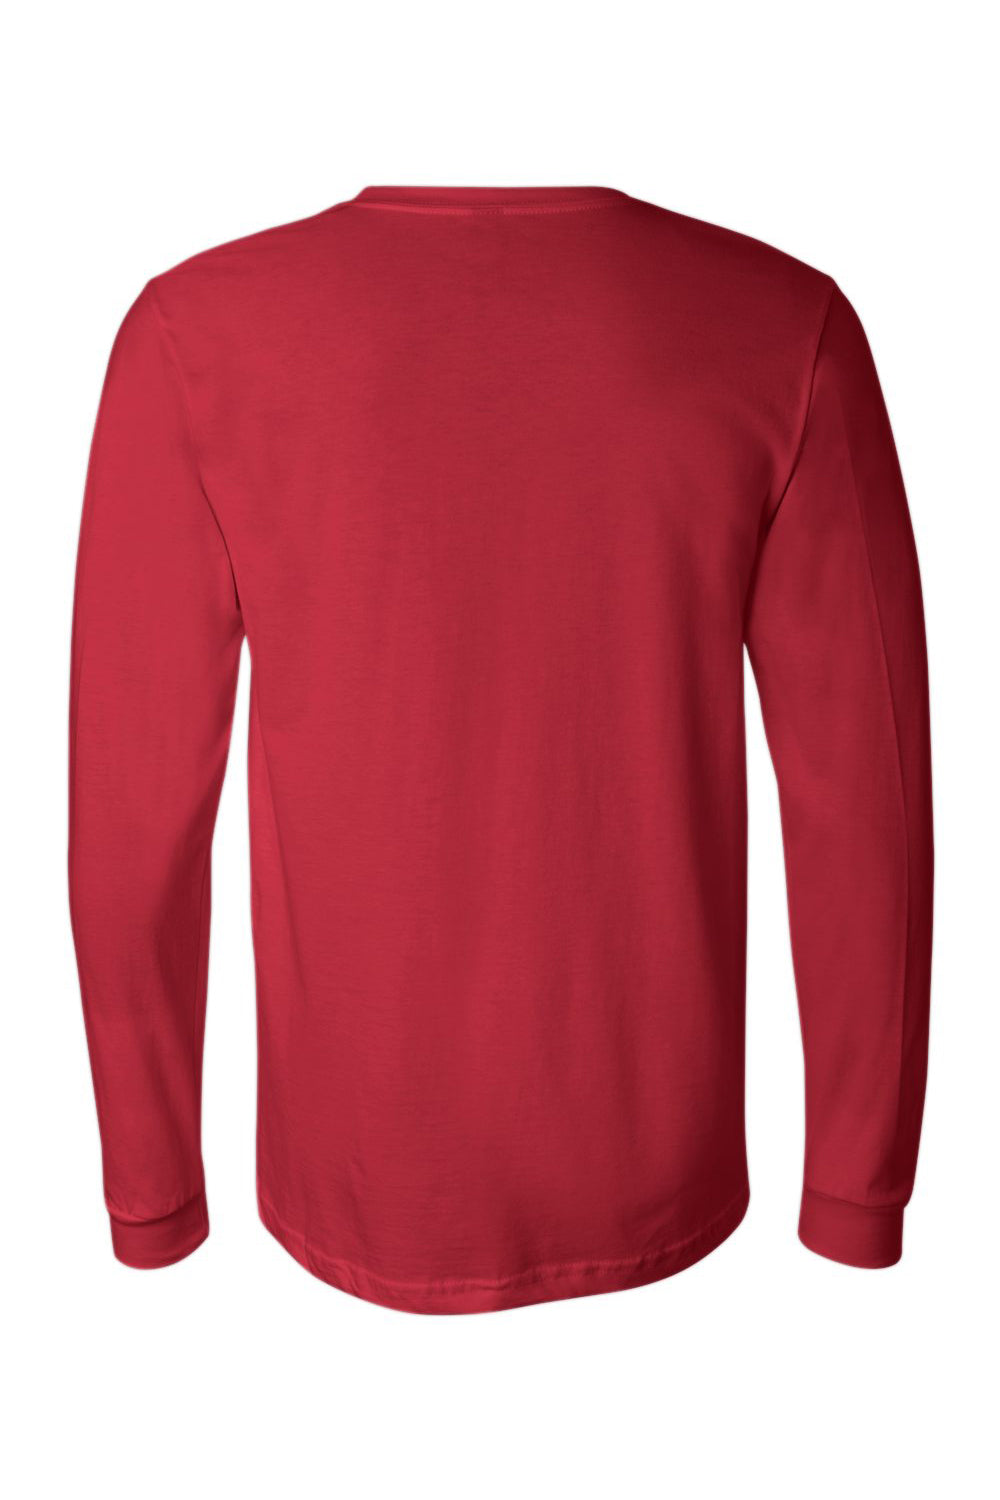 Bella + Canvas BC3501/3501 Mens Jersey Long Sleeve Crewneck T-Shirt Red Flat Back